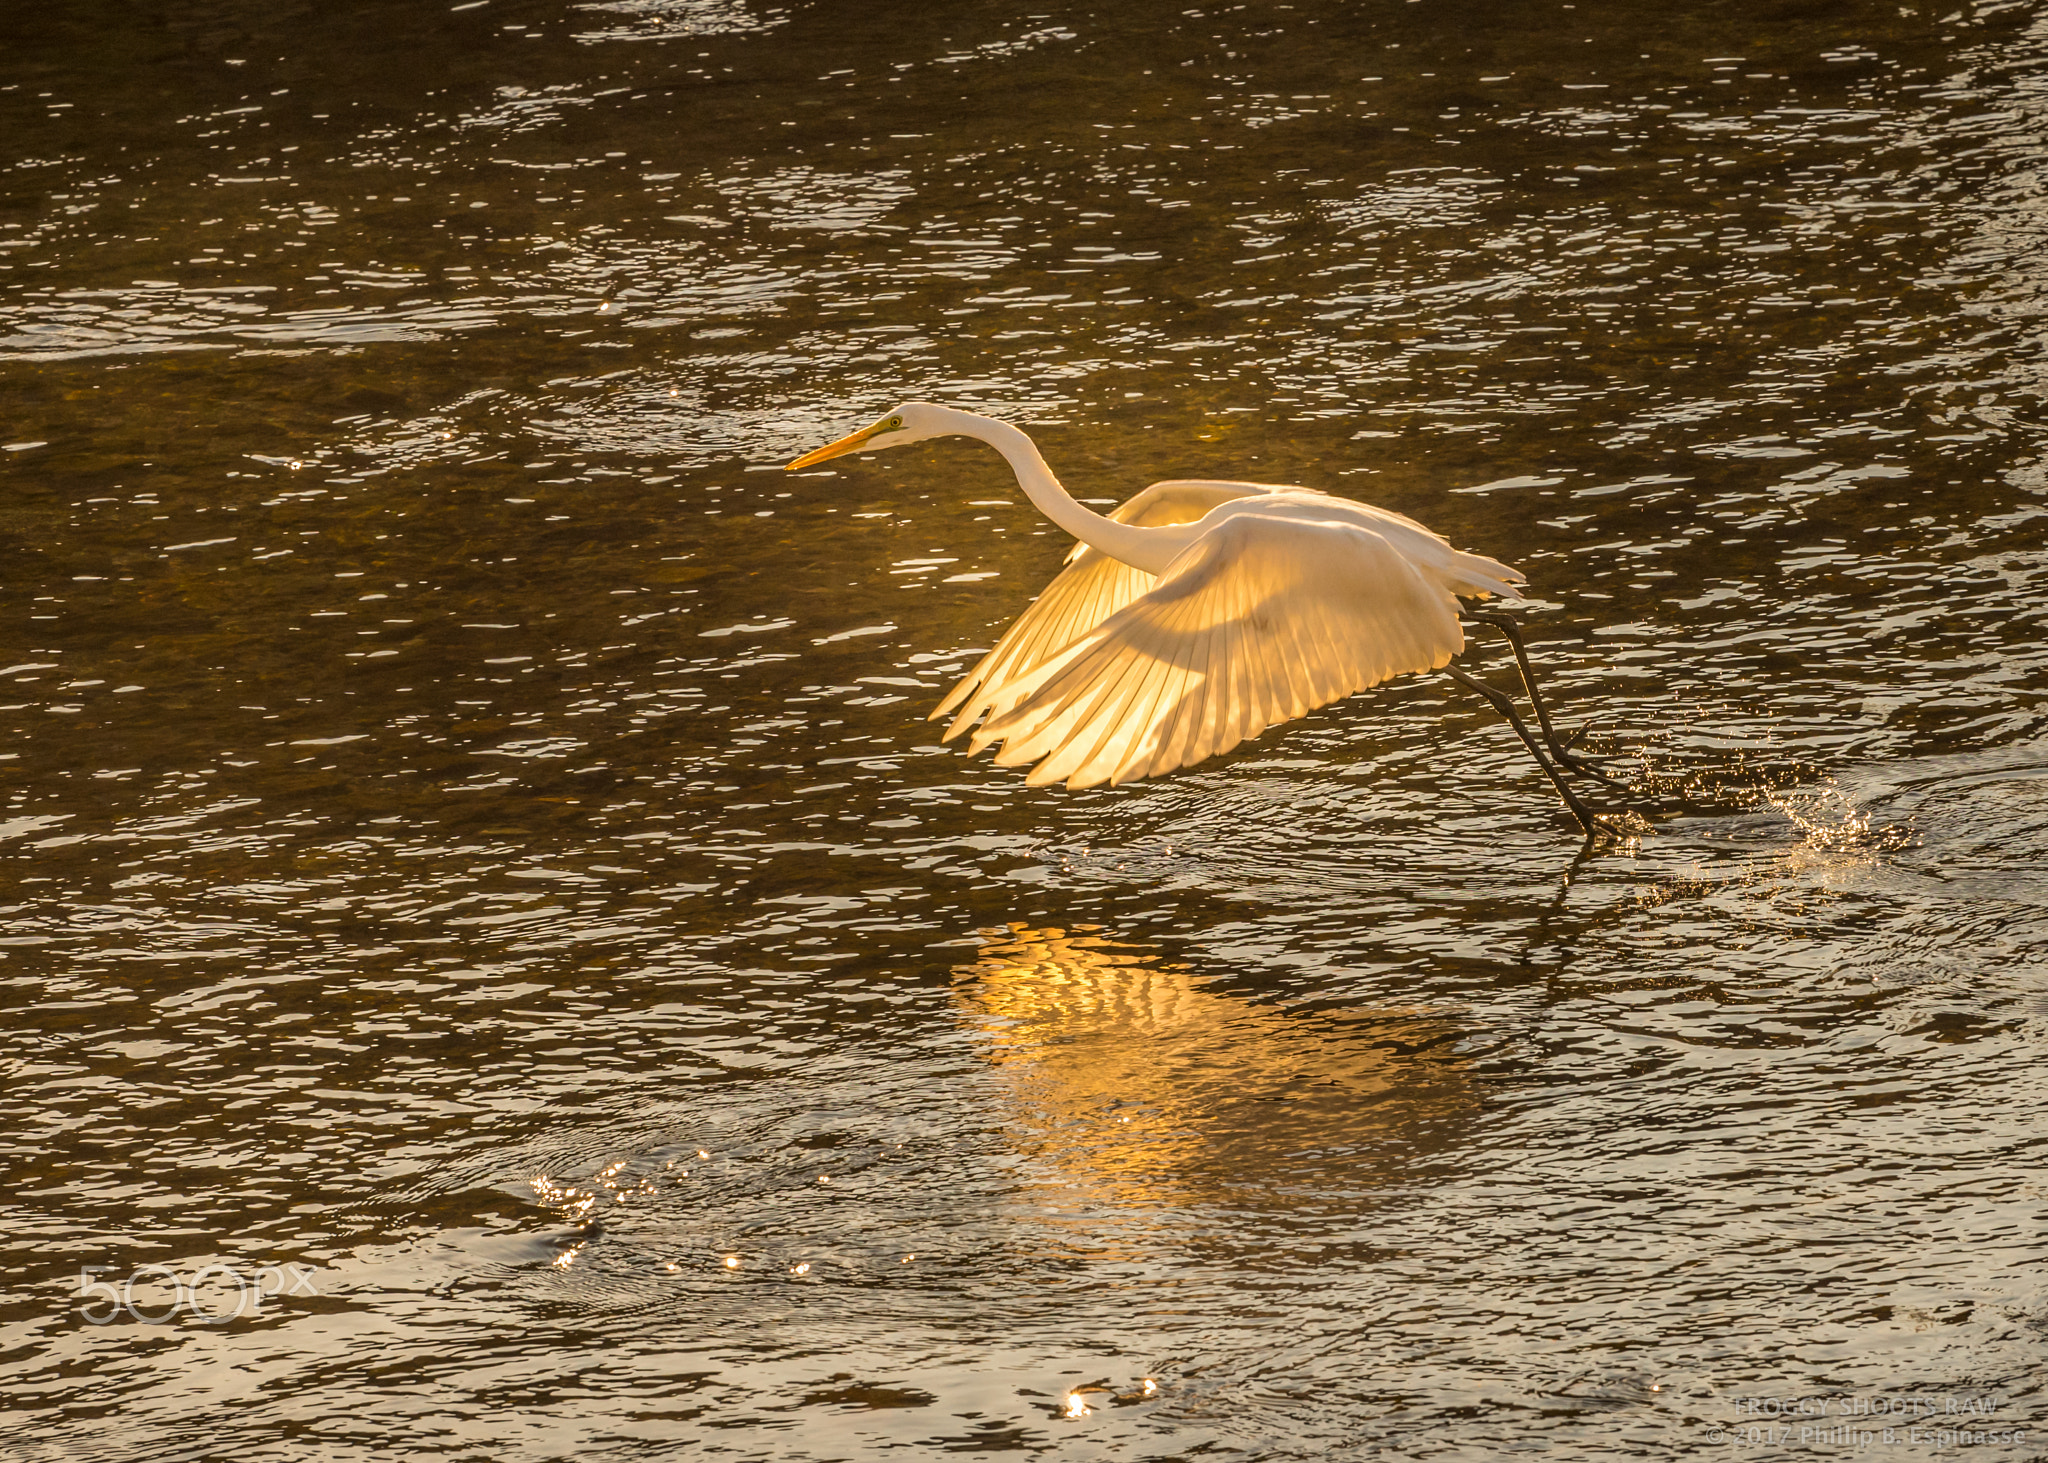 Kyoto's Great Egret lands in Kamo river